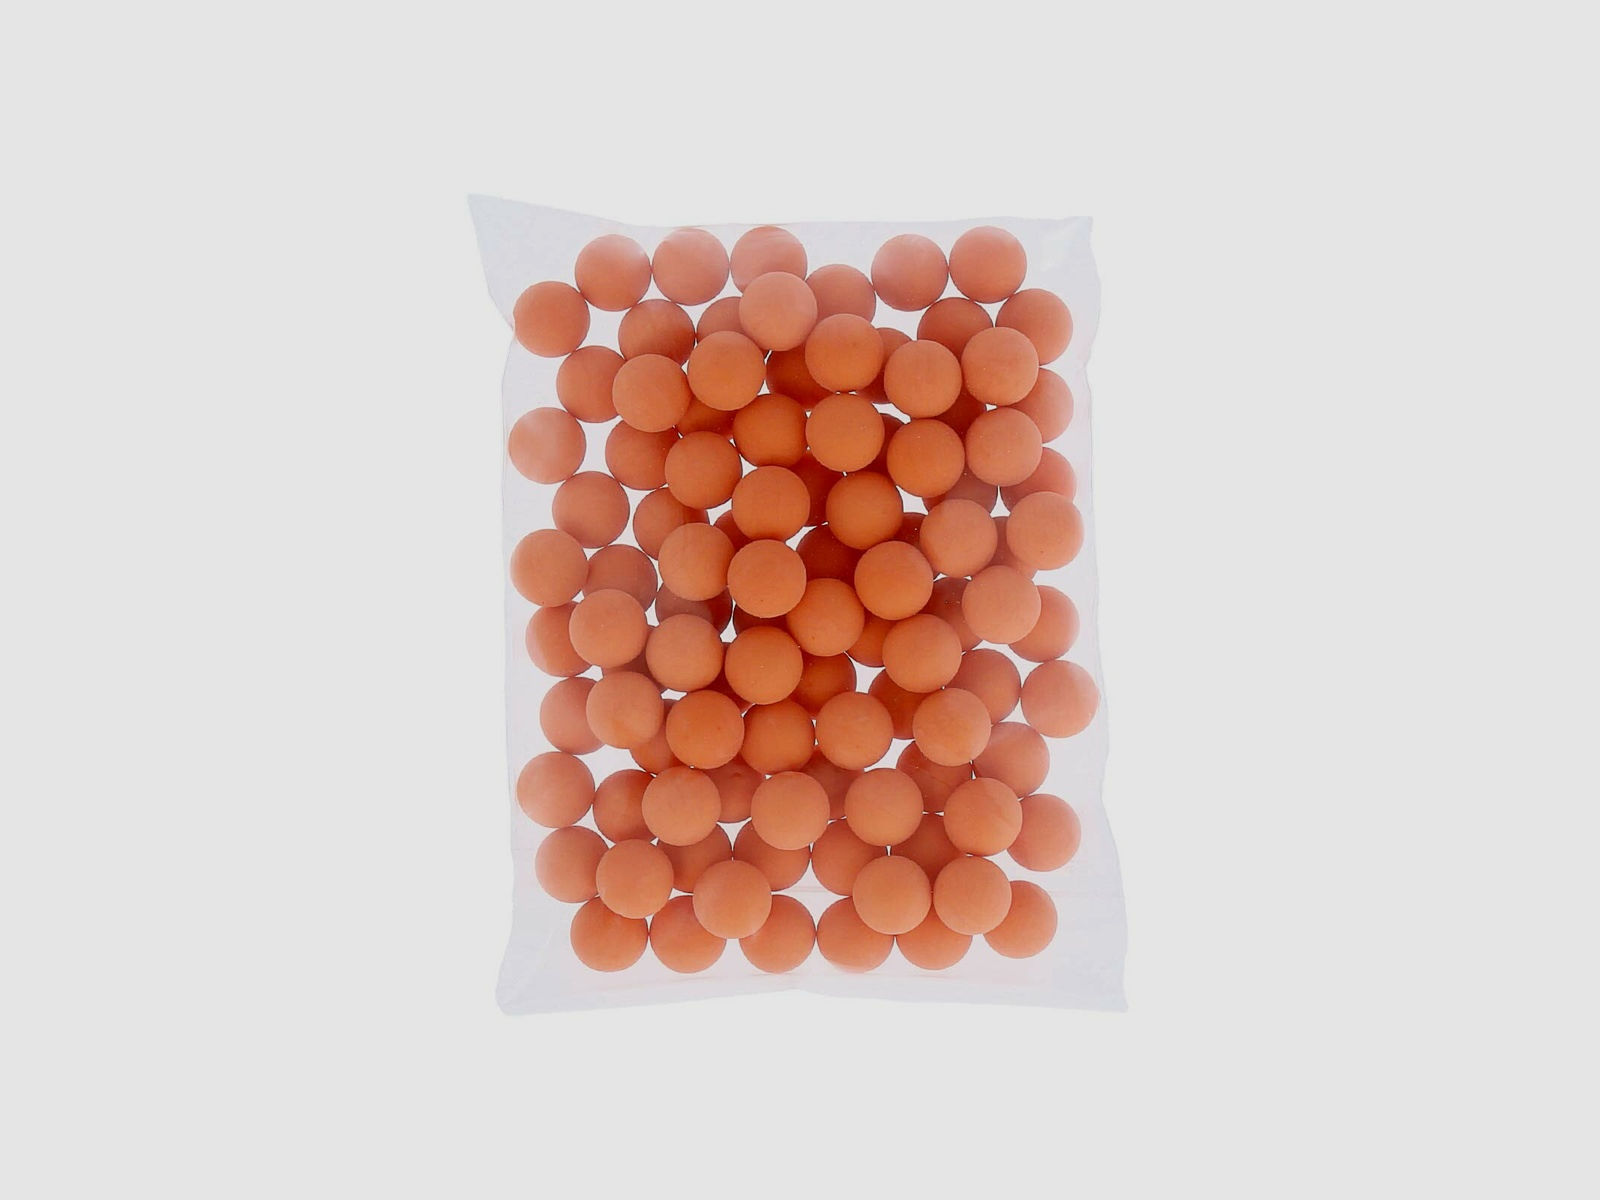 Rubberballs / Gummigeschosse Orange Kal .68 - 100 Stück